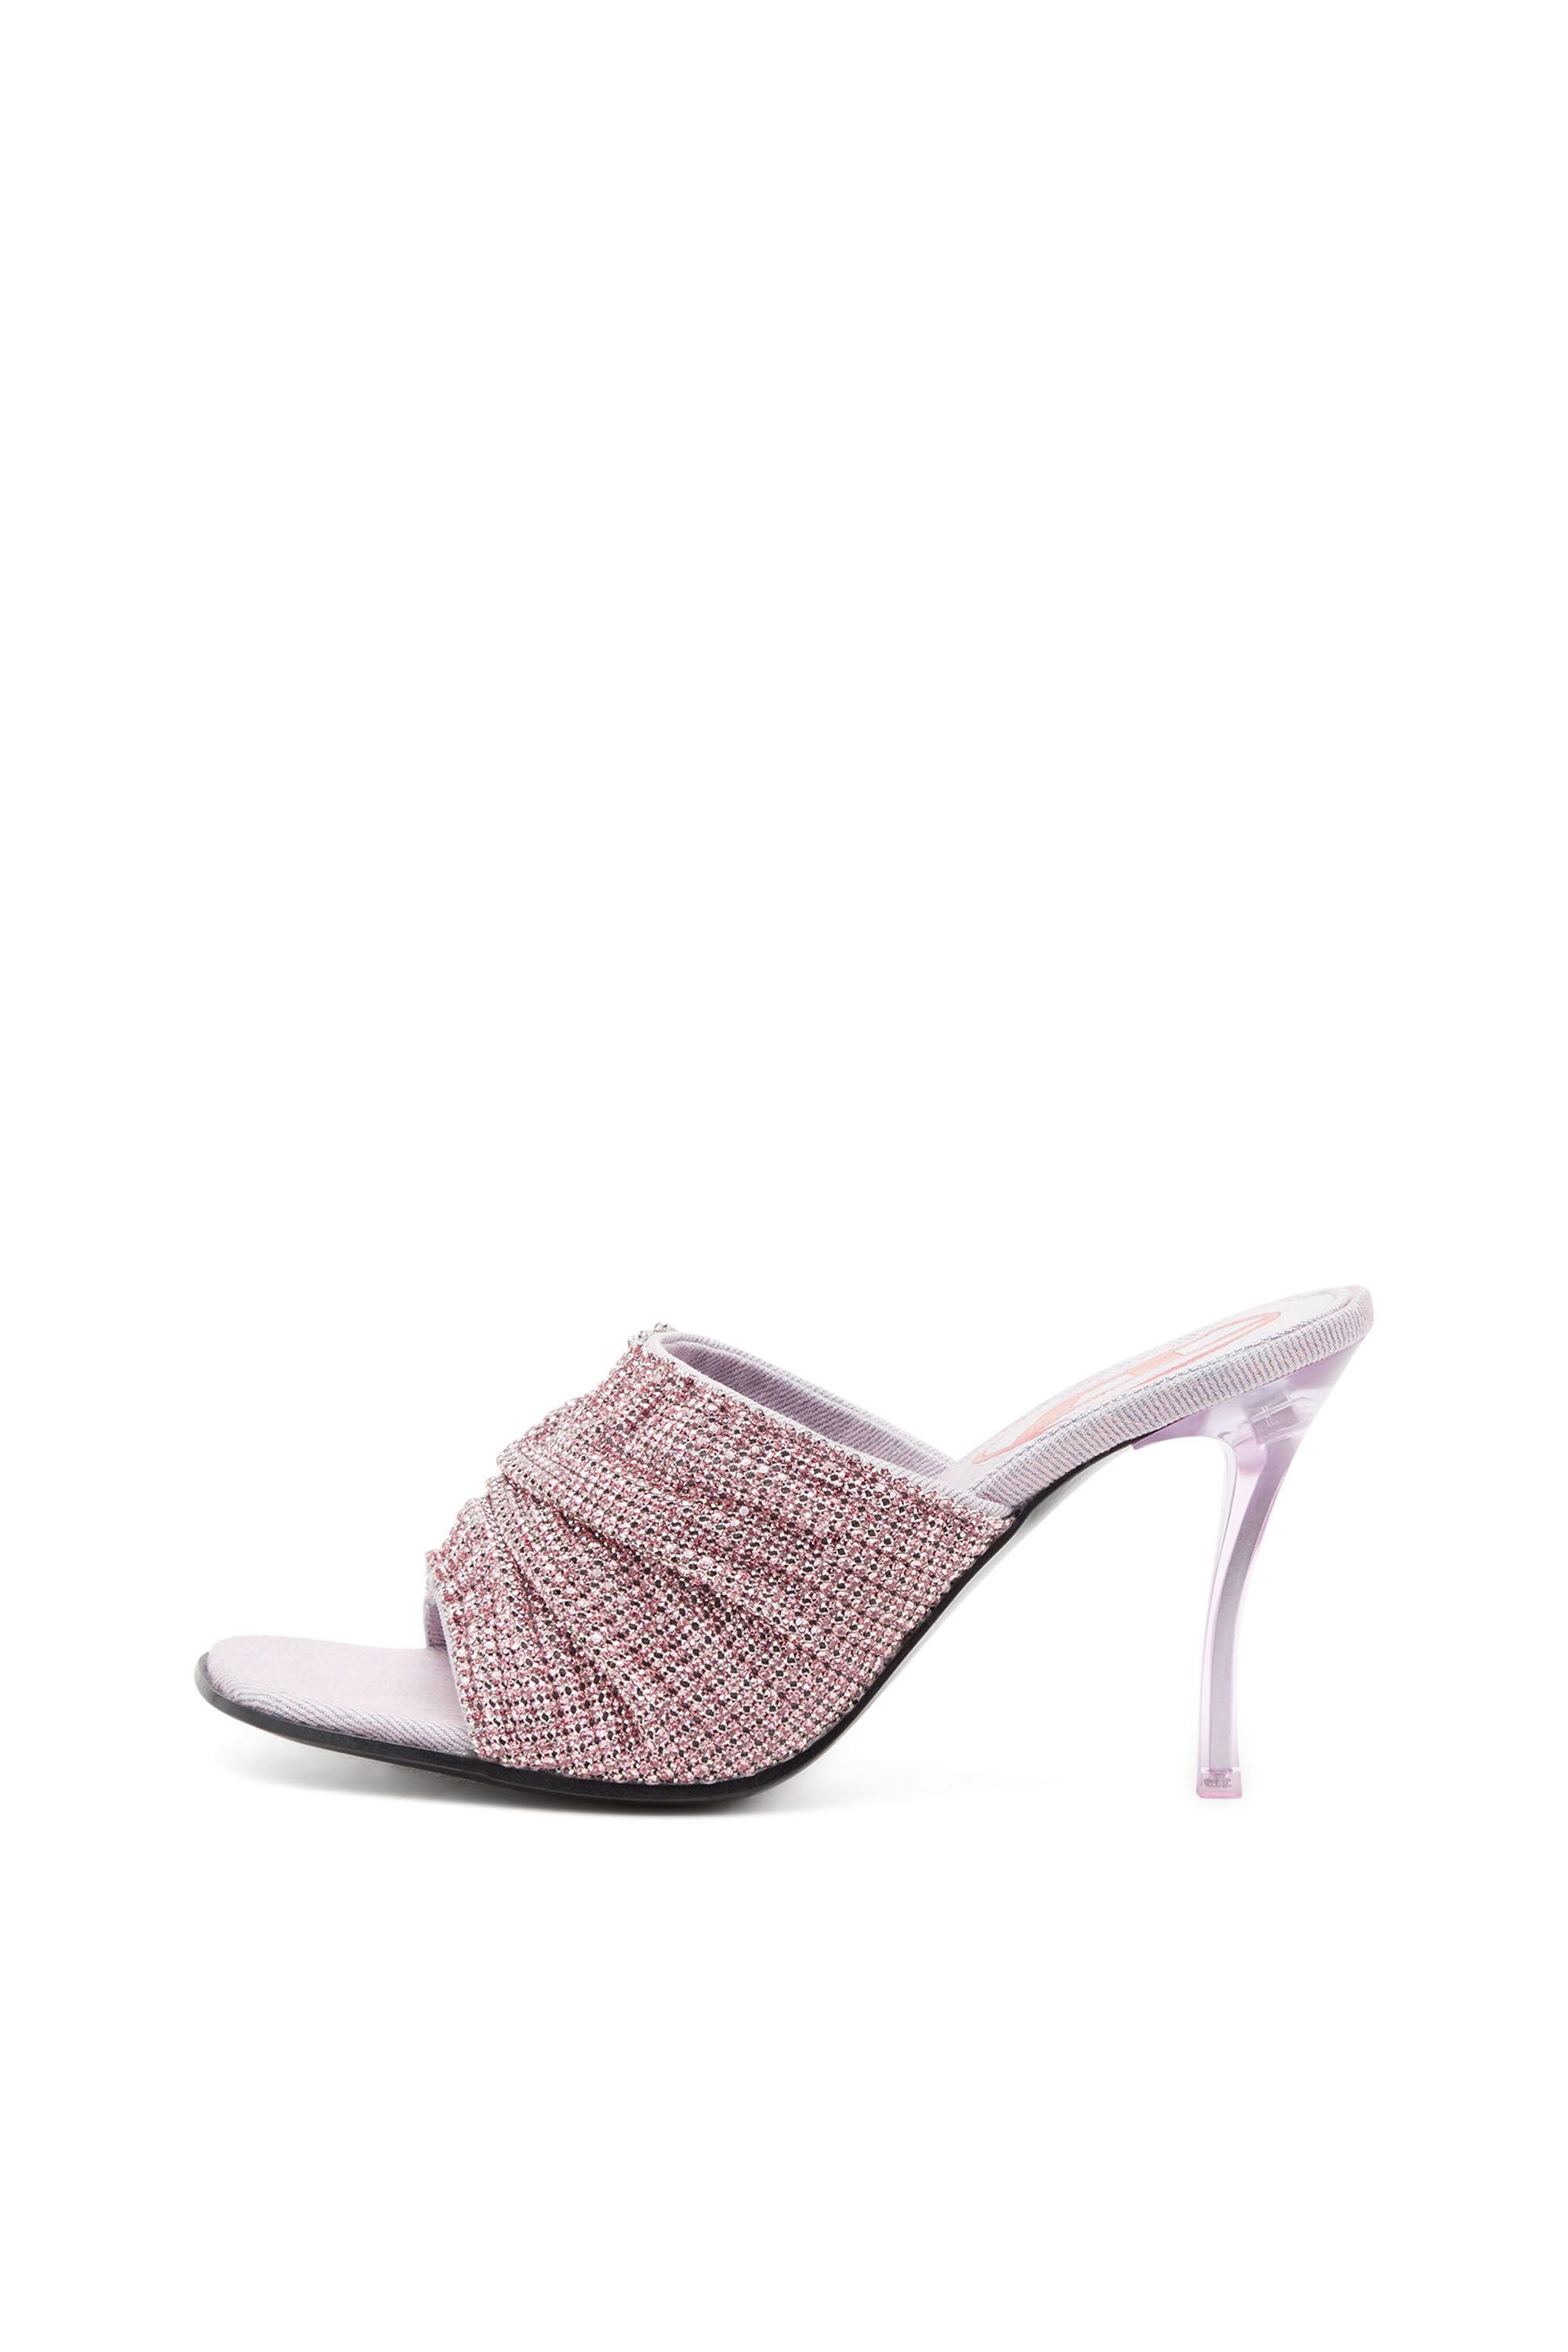 Diesel - D-SYDNEY SDL S, Woman D-Sydney Sdl S Sandals - Mule sandals with rhinestone band in Pink - Image 7